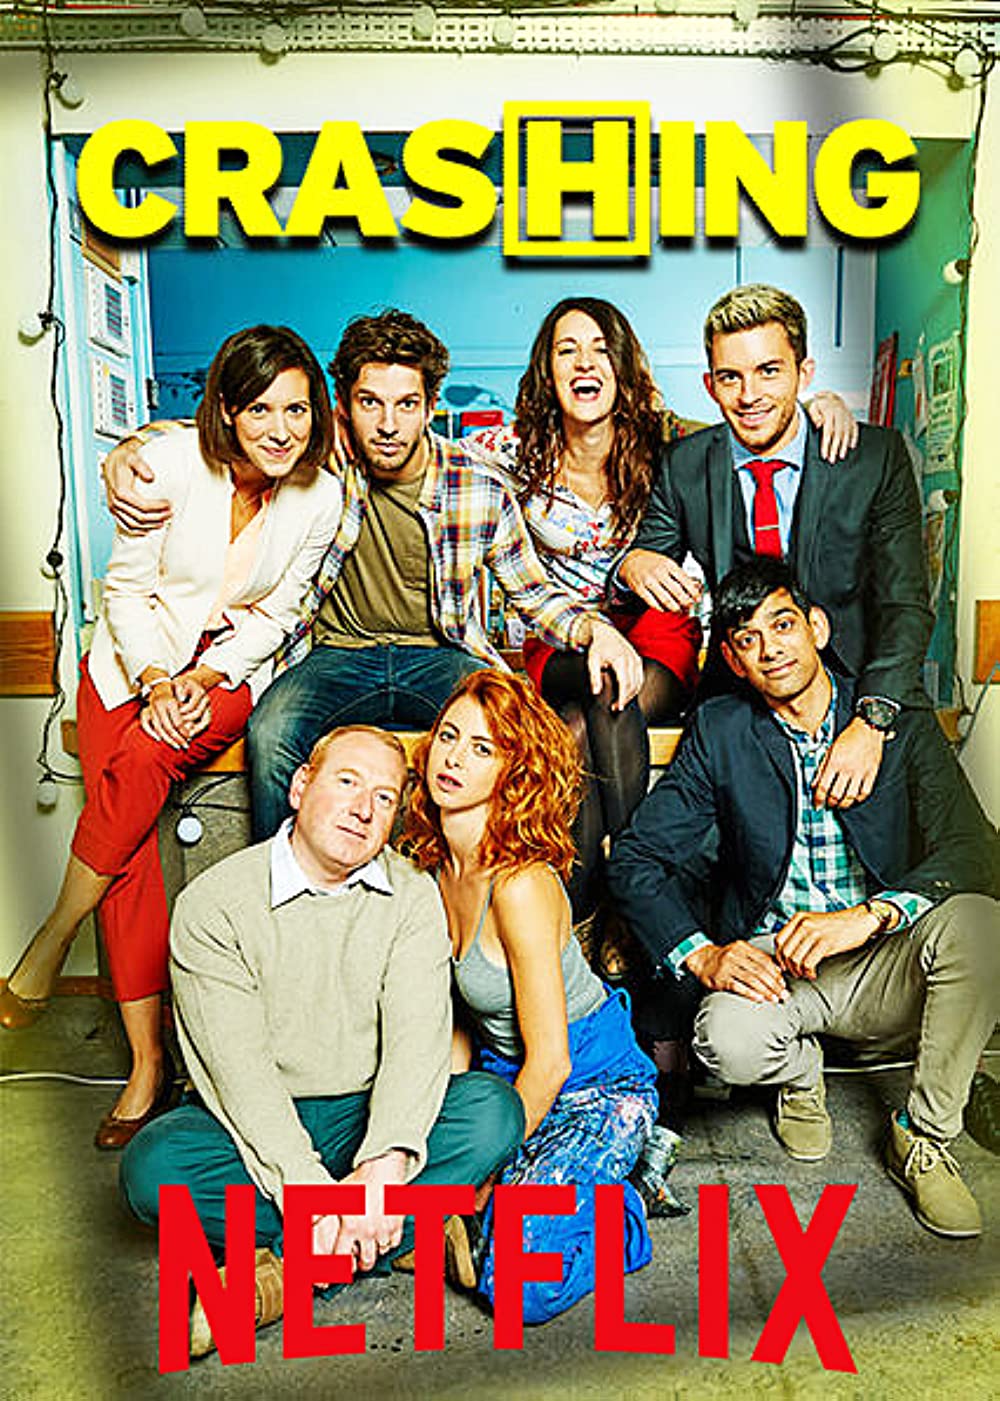 Crashing on Netflix (Pic credit: IMDb)